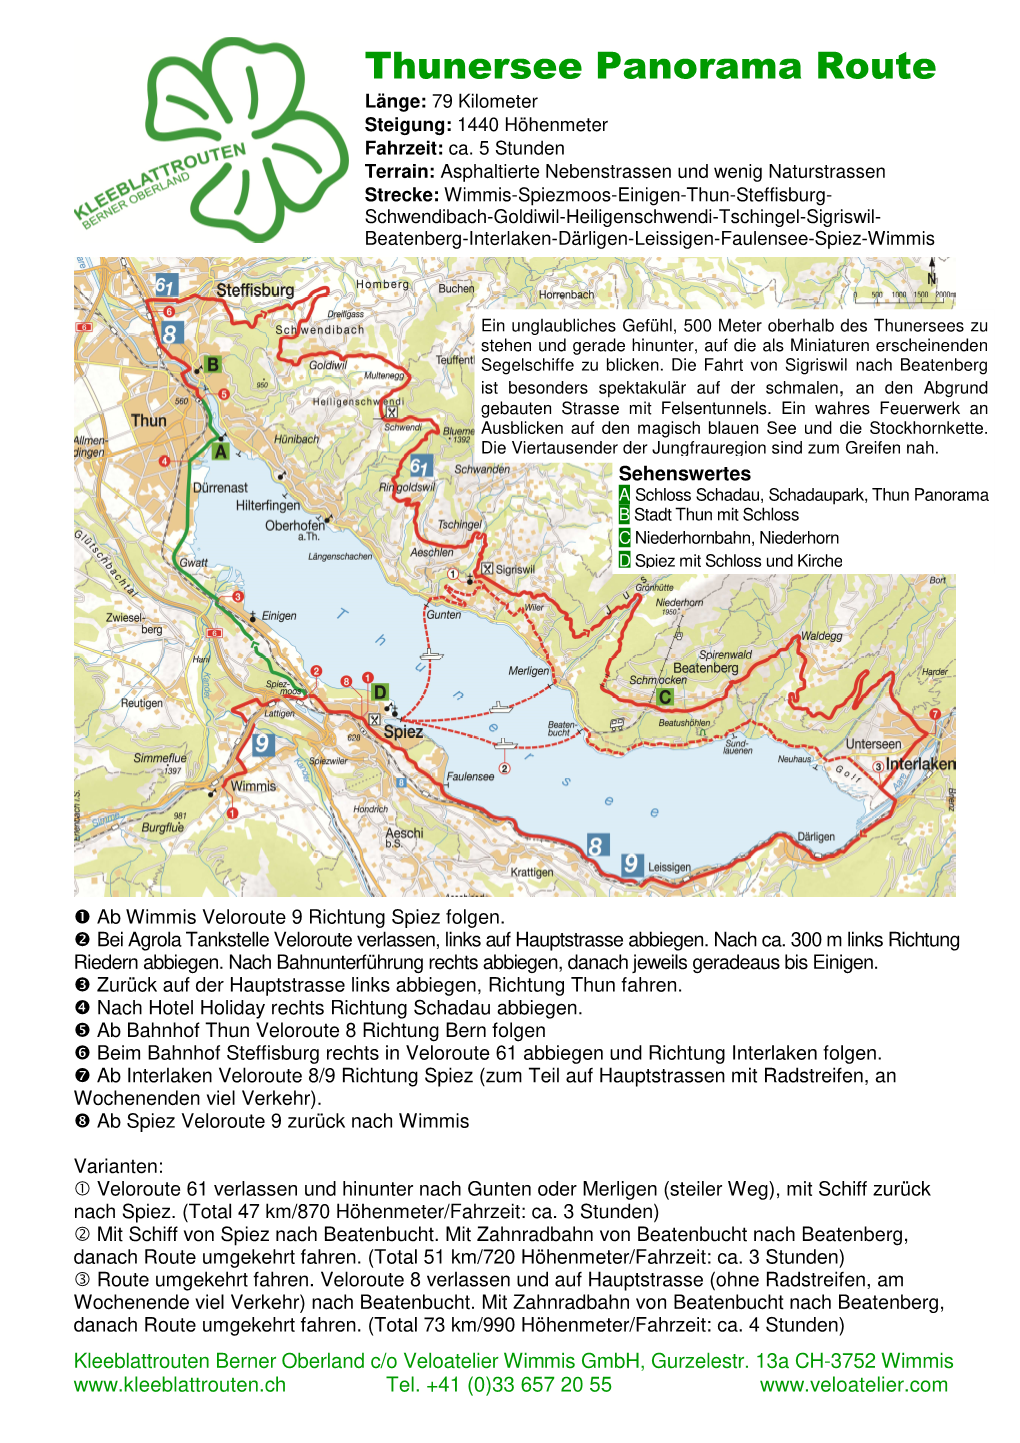 Thunersee Panorama Route Länge: 79 Kilometer Steigung: 1440 Höhenmeter Fahrzeit: Ca